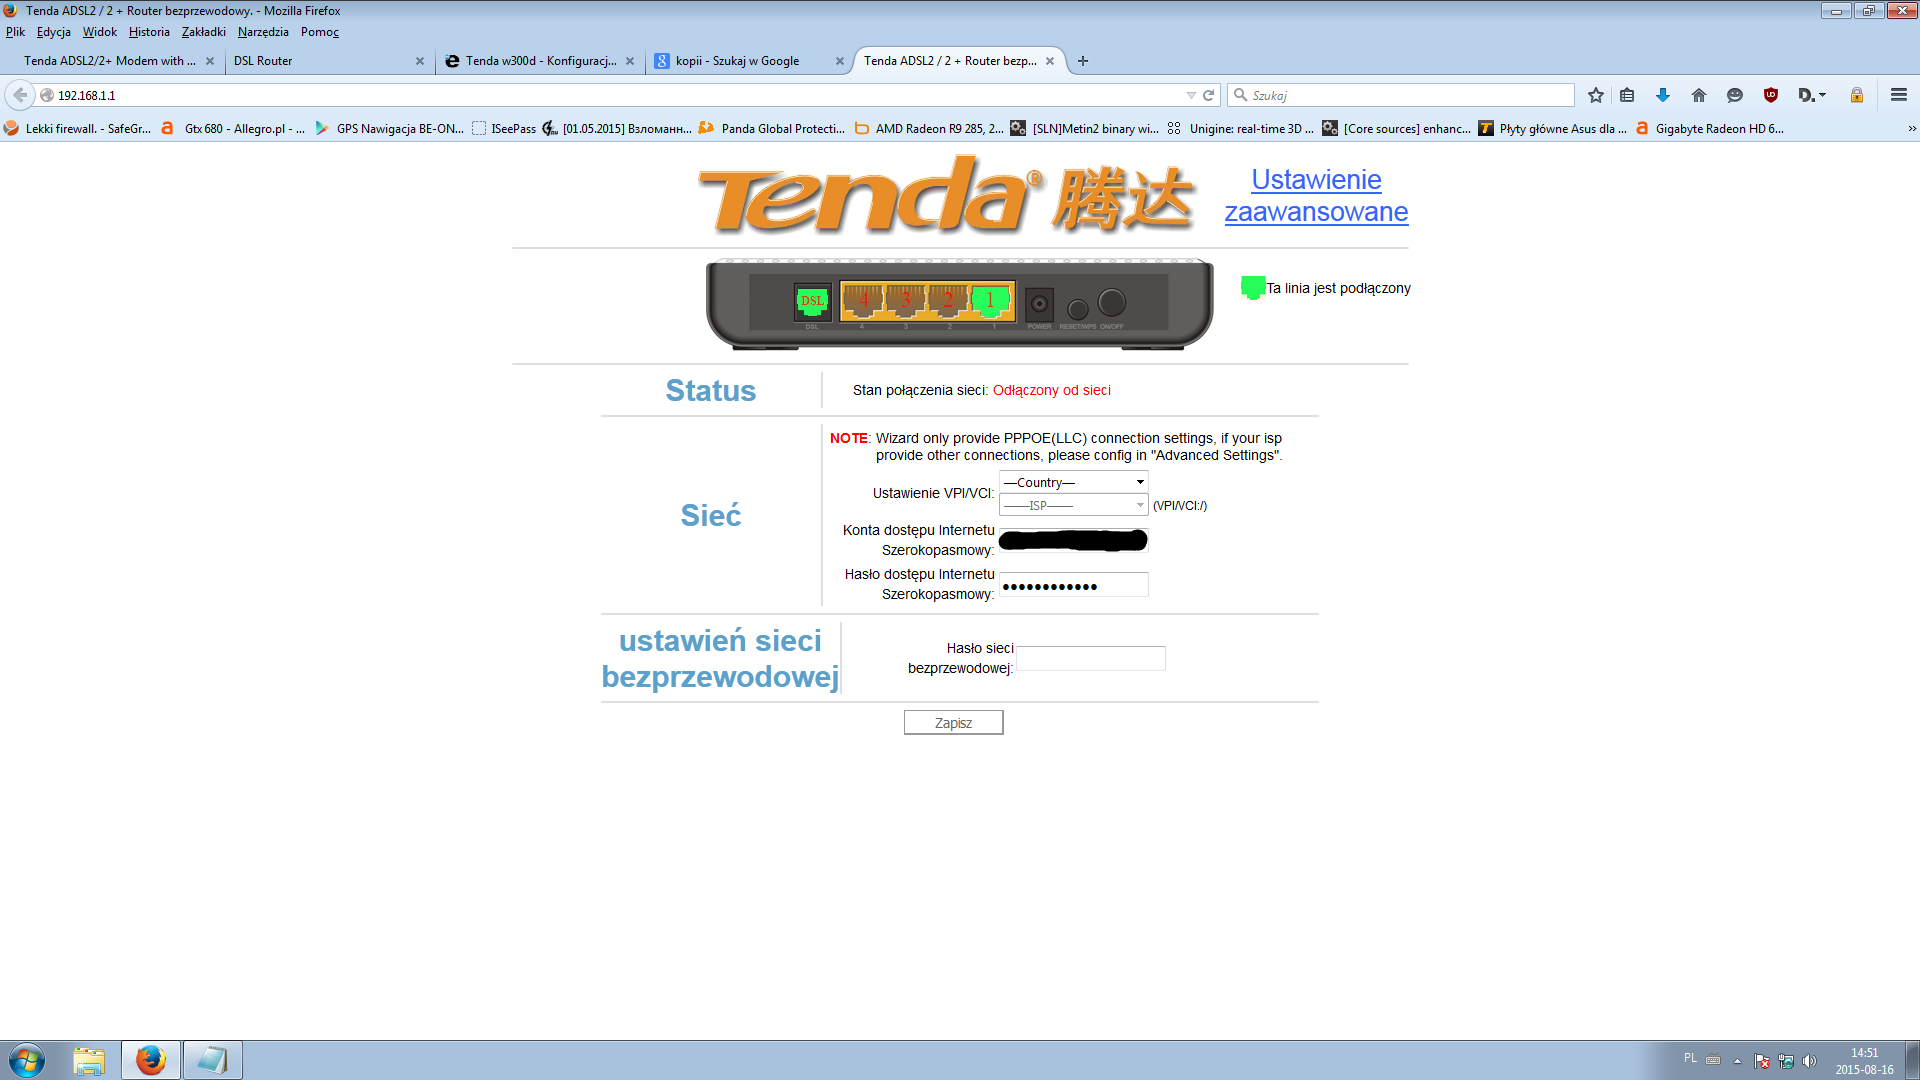 Thursday Repel directory Tenda w300d - Konfiguracja pod Orange (neostrada) - elektroda.pl